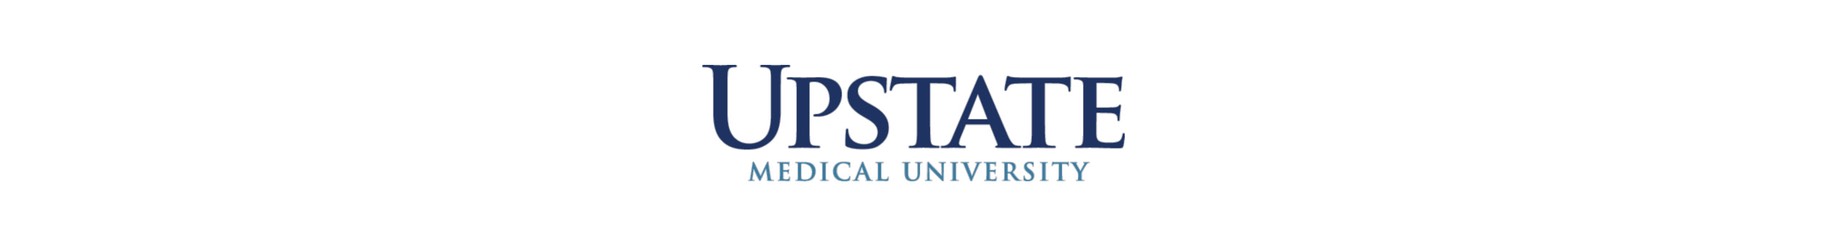 Upstate logo centered